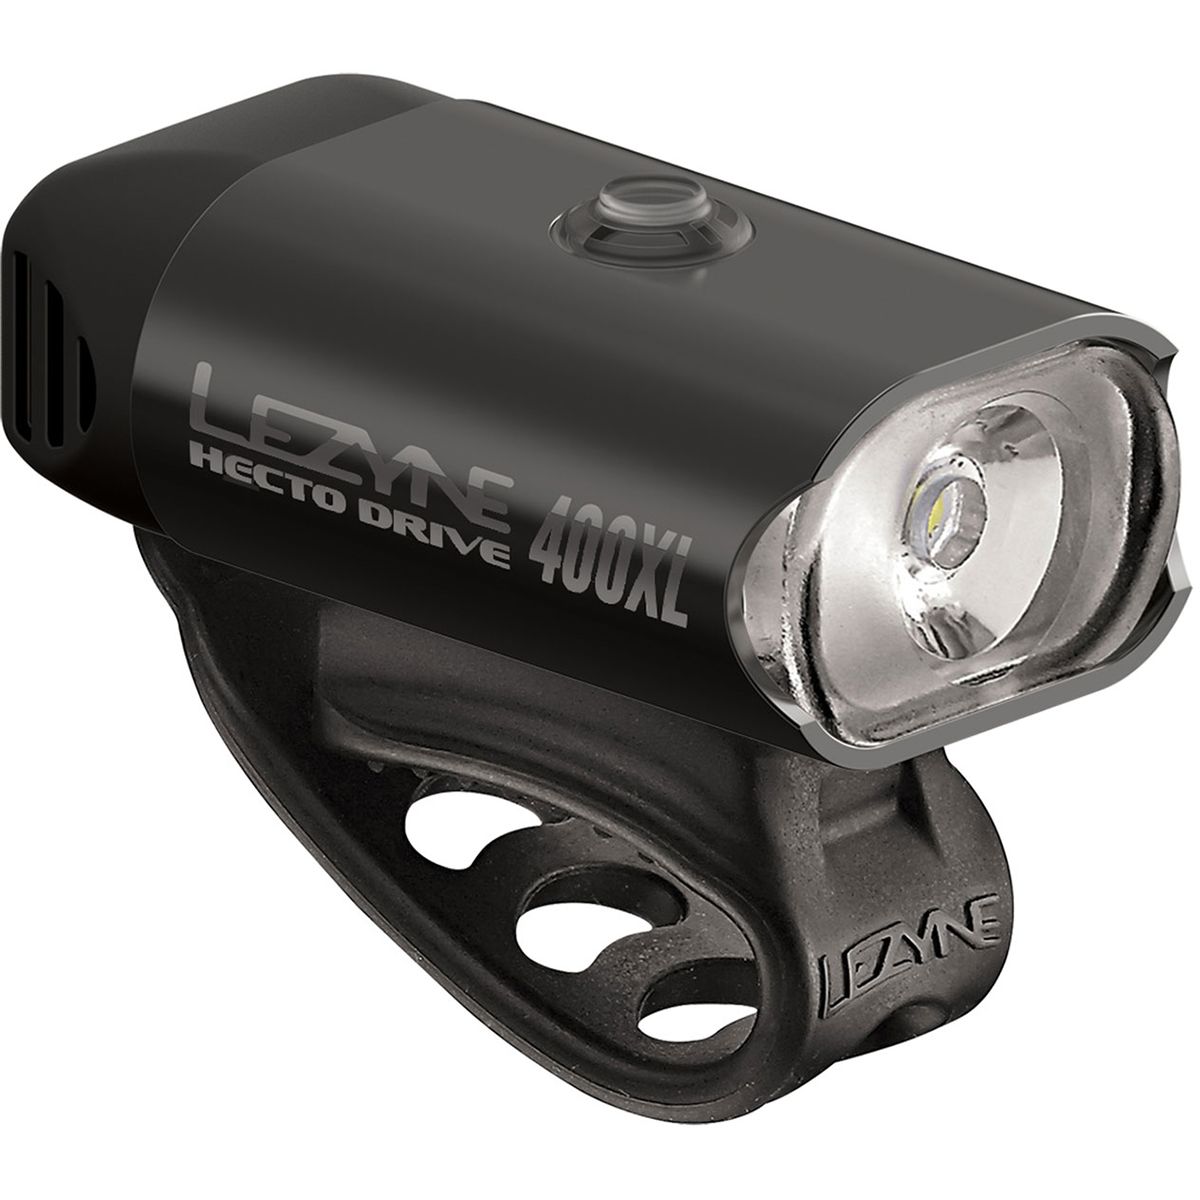 Lezyne Hecto Drive 400XL Limited Holiday Edition Headlight